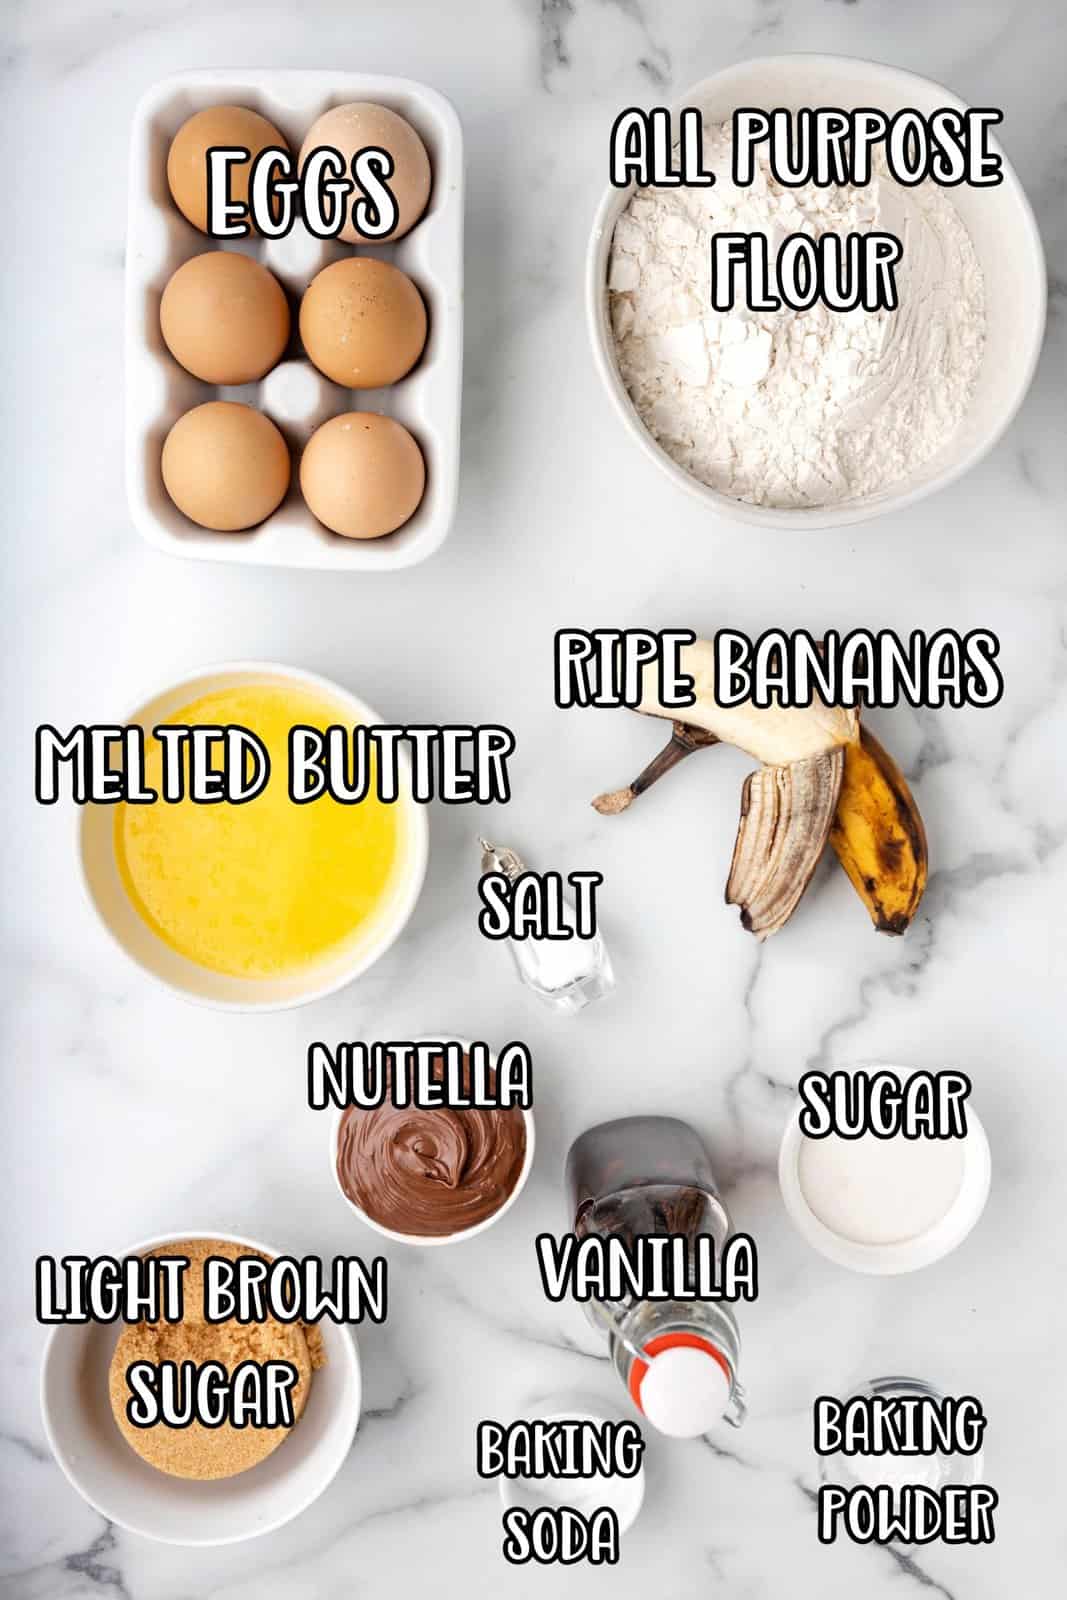 Eggs, all purpose flour, melted buter, salt, nutella, light brown sugar, bananas, vanilla extract, baking soda, baking powder, sugar, and eggs.